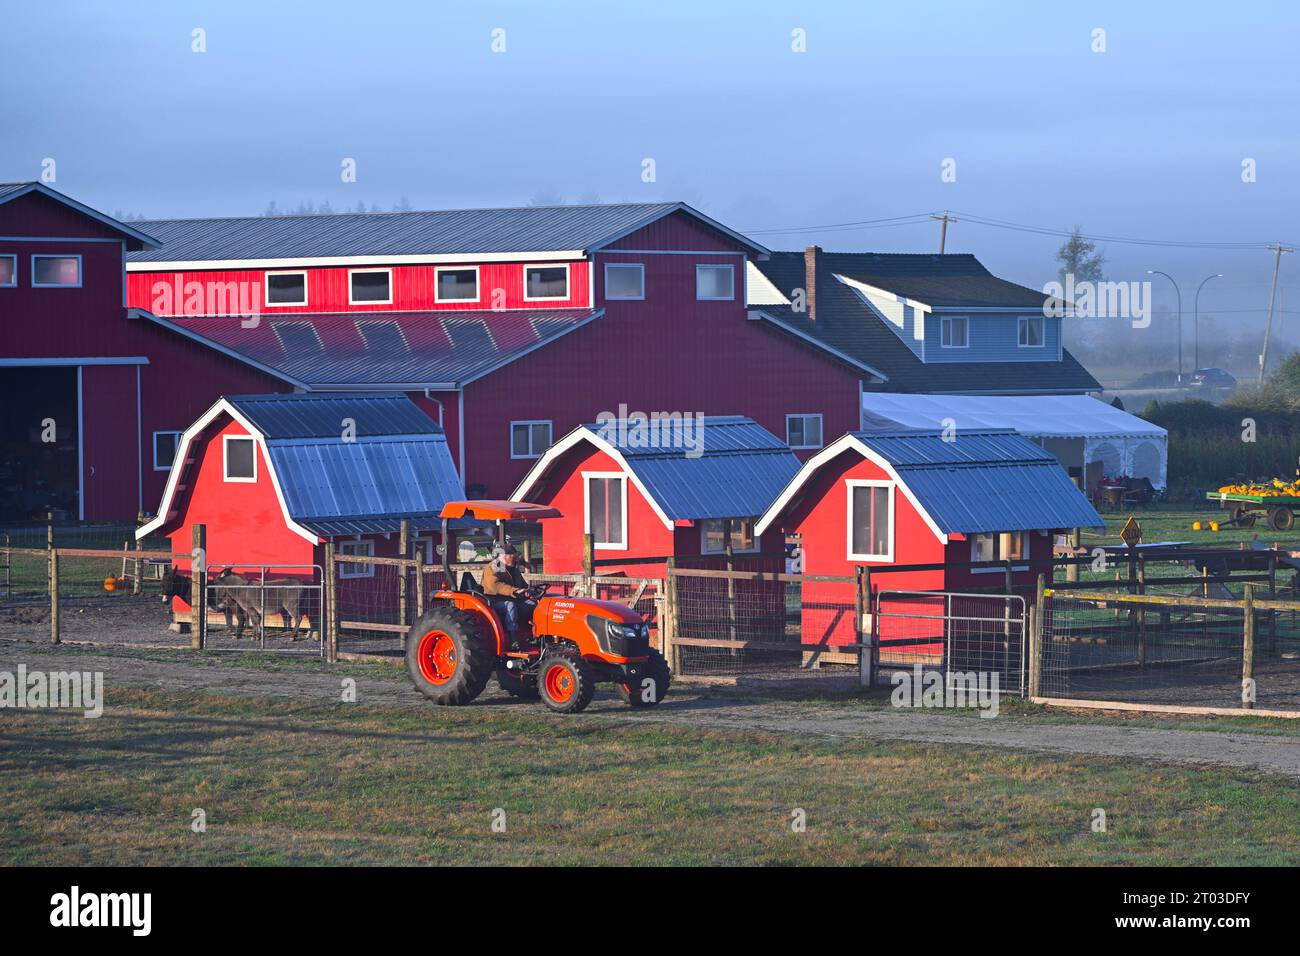 Farm, Maple Ridge, British Columbia, Canada Stock Photo